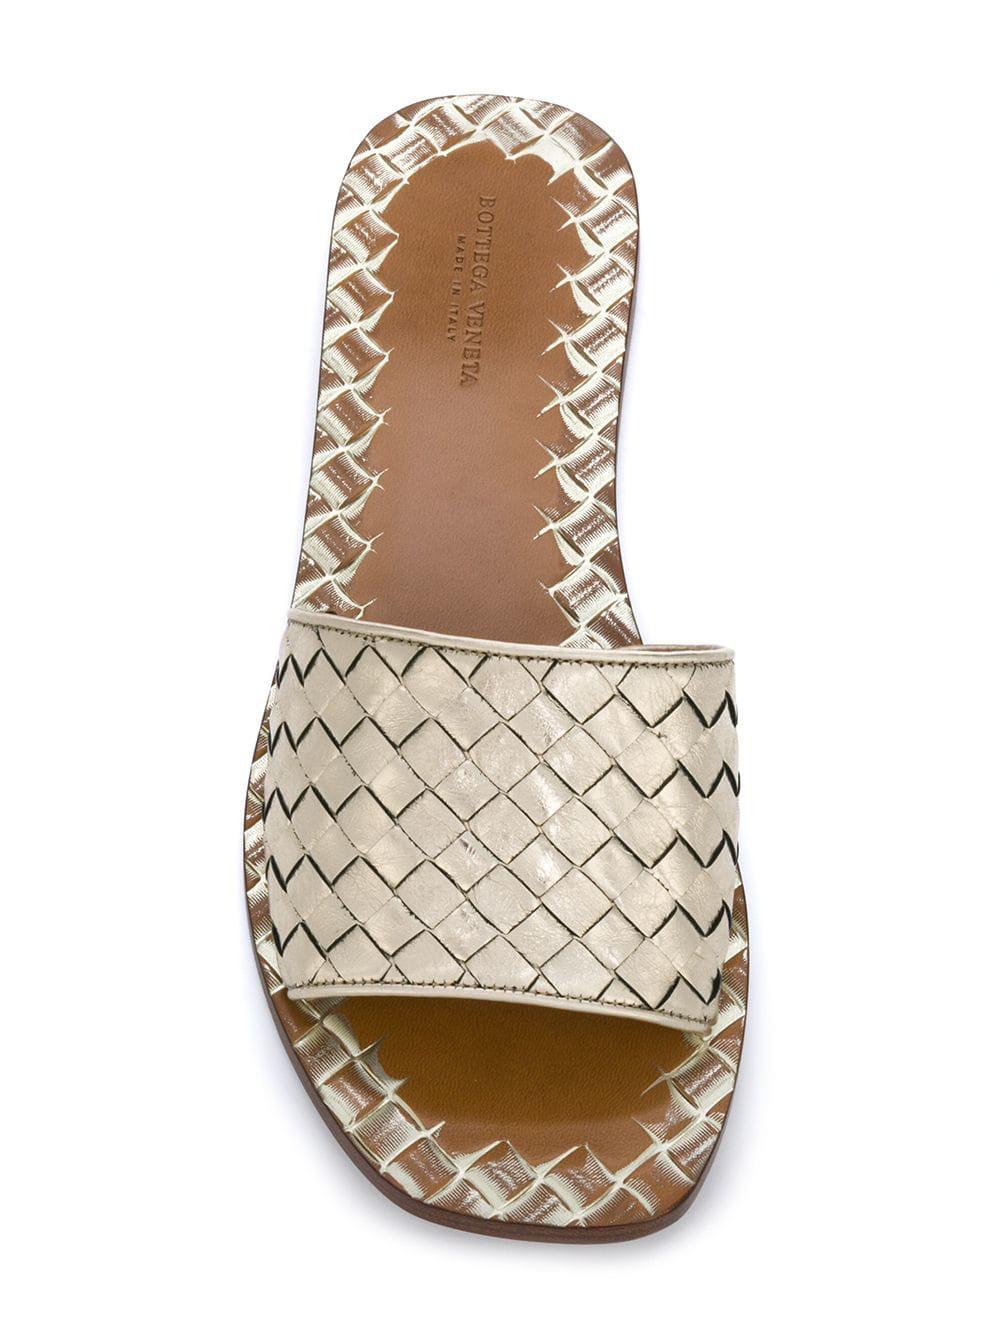 Bottega Veneta Intrecciato Leather Flat Sandals in Gold (Metallic) | Lyst